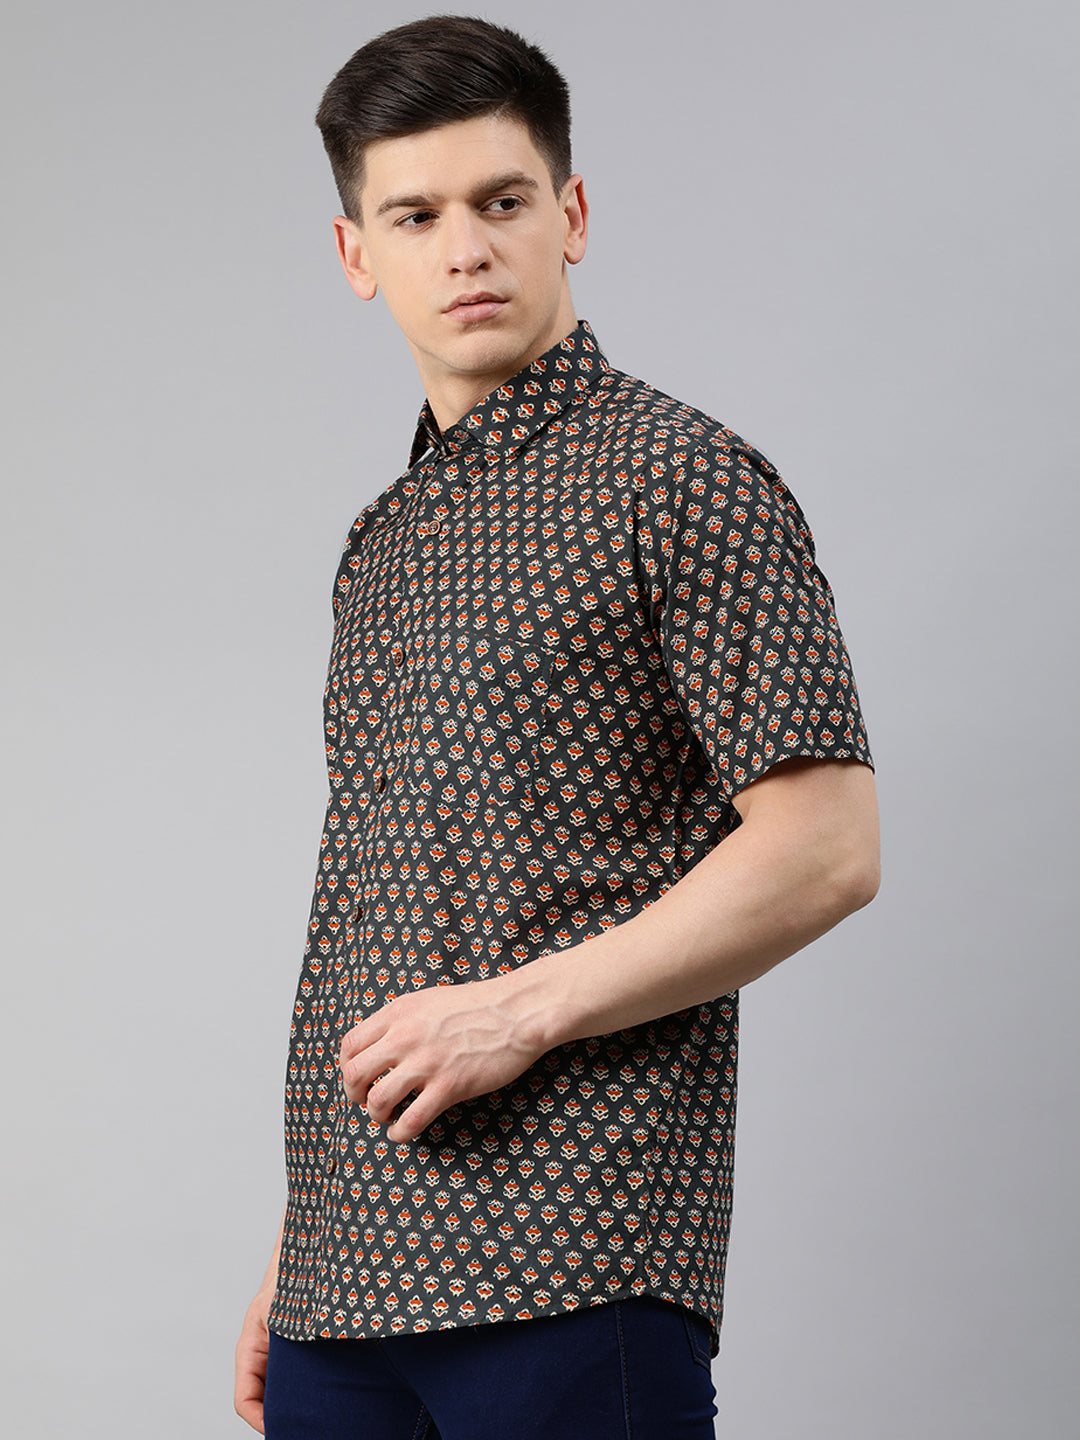 Gray Cotton Short Sleeves Shirts For Men-MMH027 - NOZ2TOZ